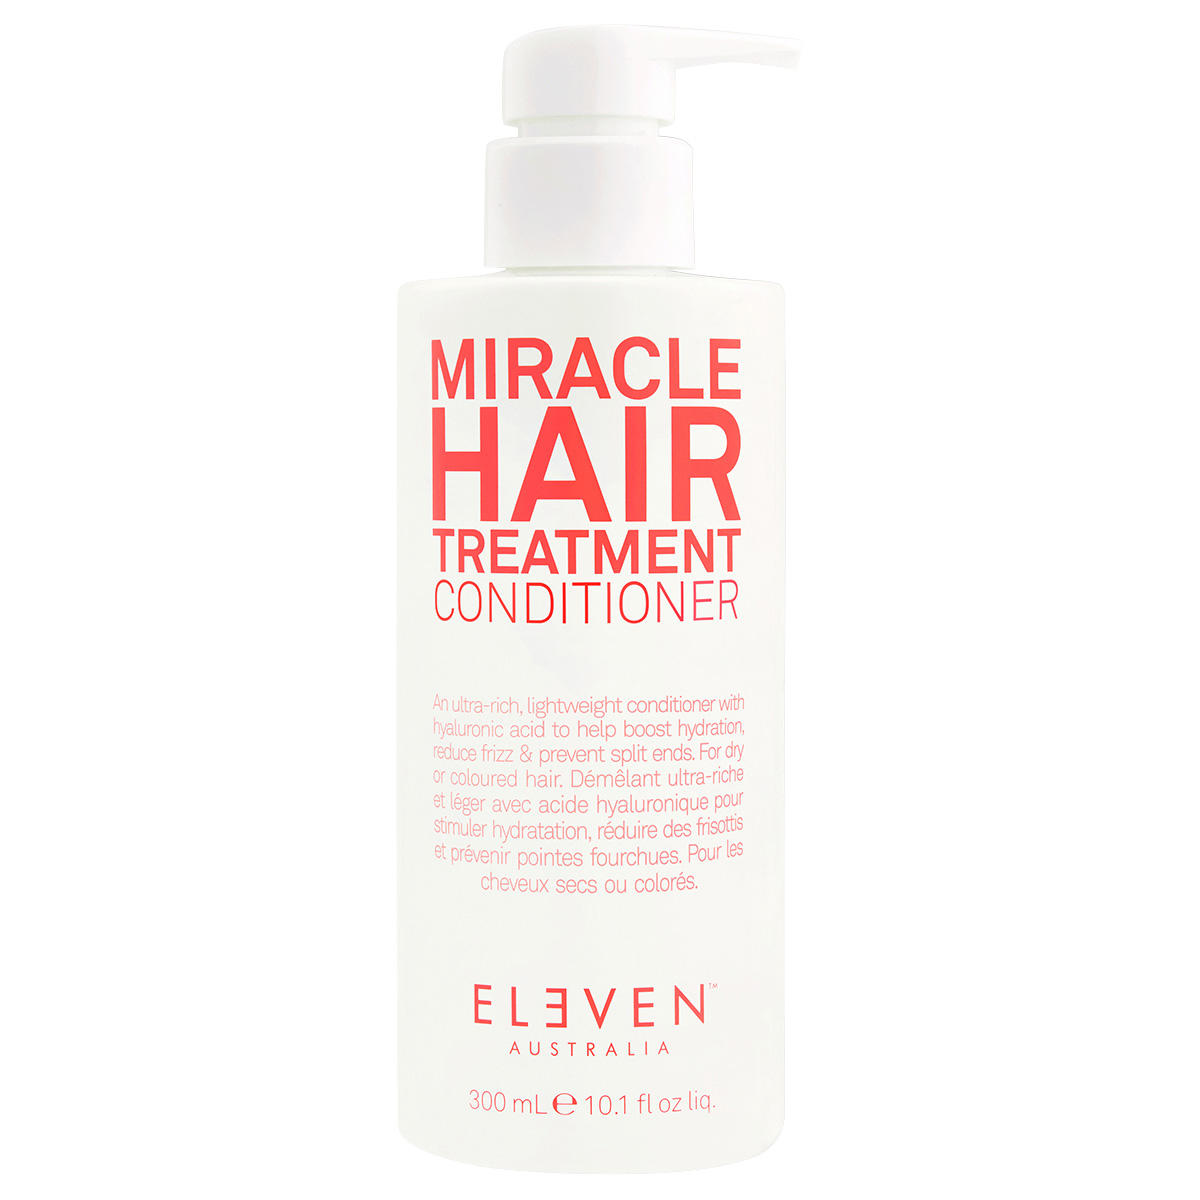 ELEVEN Australia Miracle Hair Treatment Conditioner 300 ml - 1